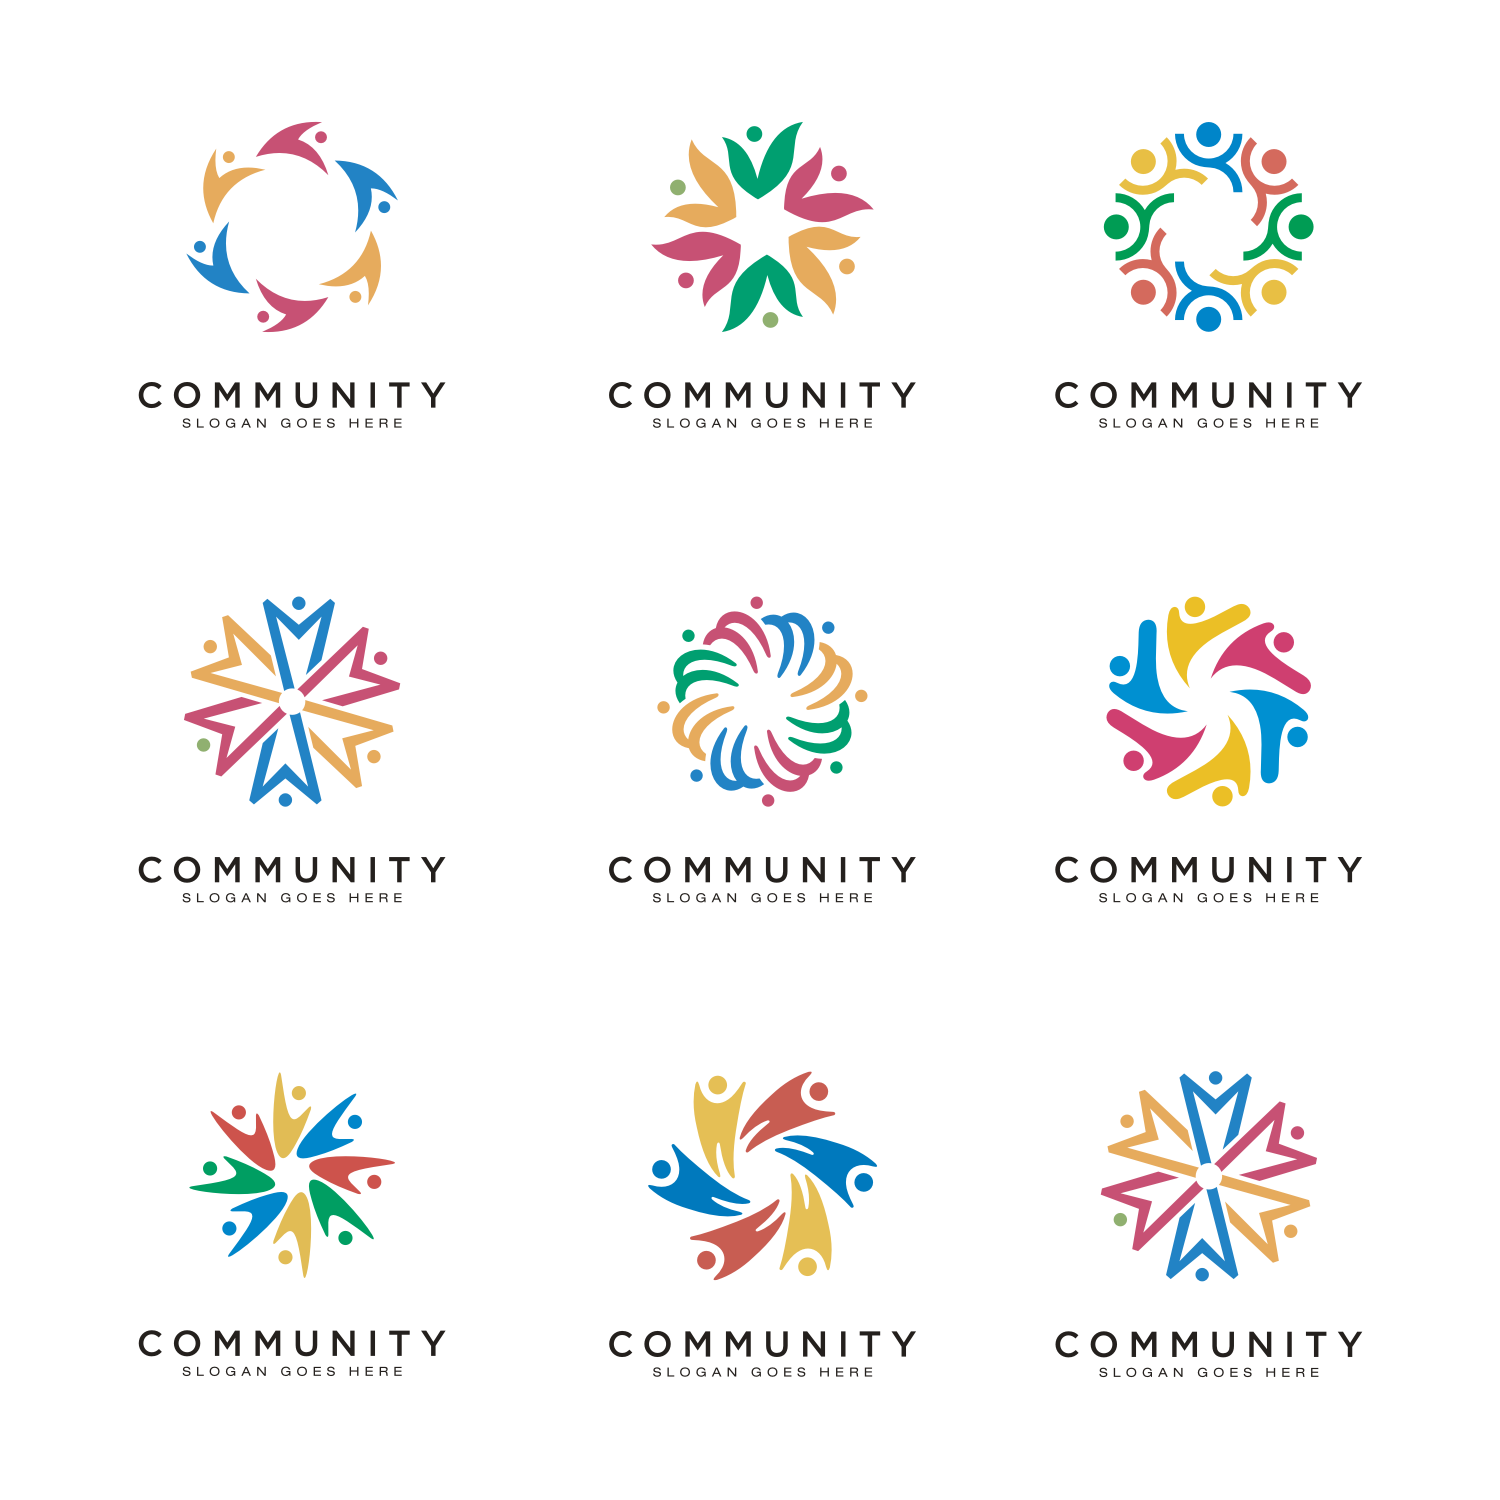 9 Teamwork People Community Logo Design cover image.